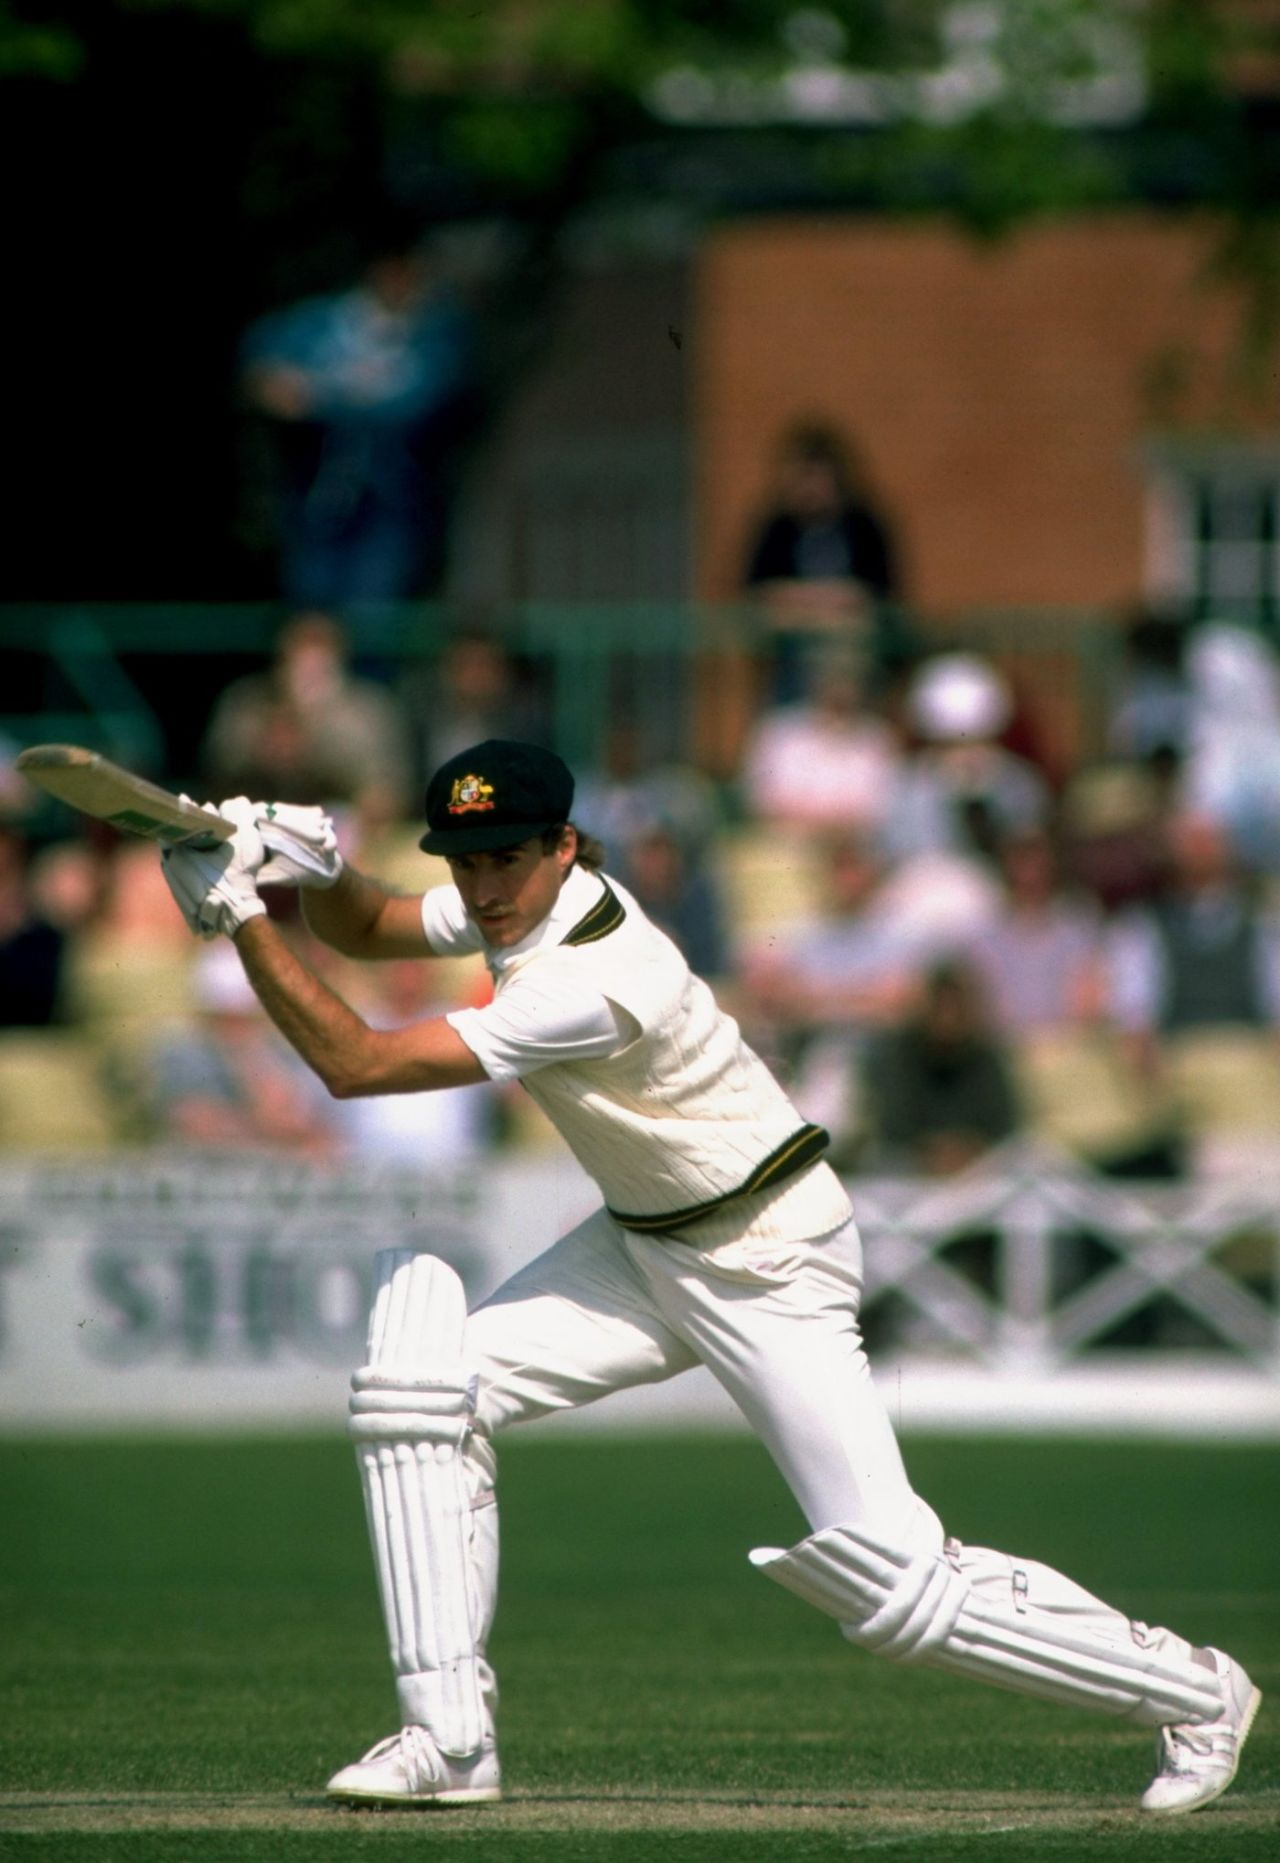 Wayne Phillips drives, Somerset vs Australians, day one, Taunton, May 8, 1985
